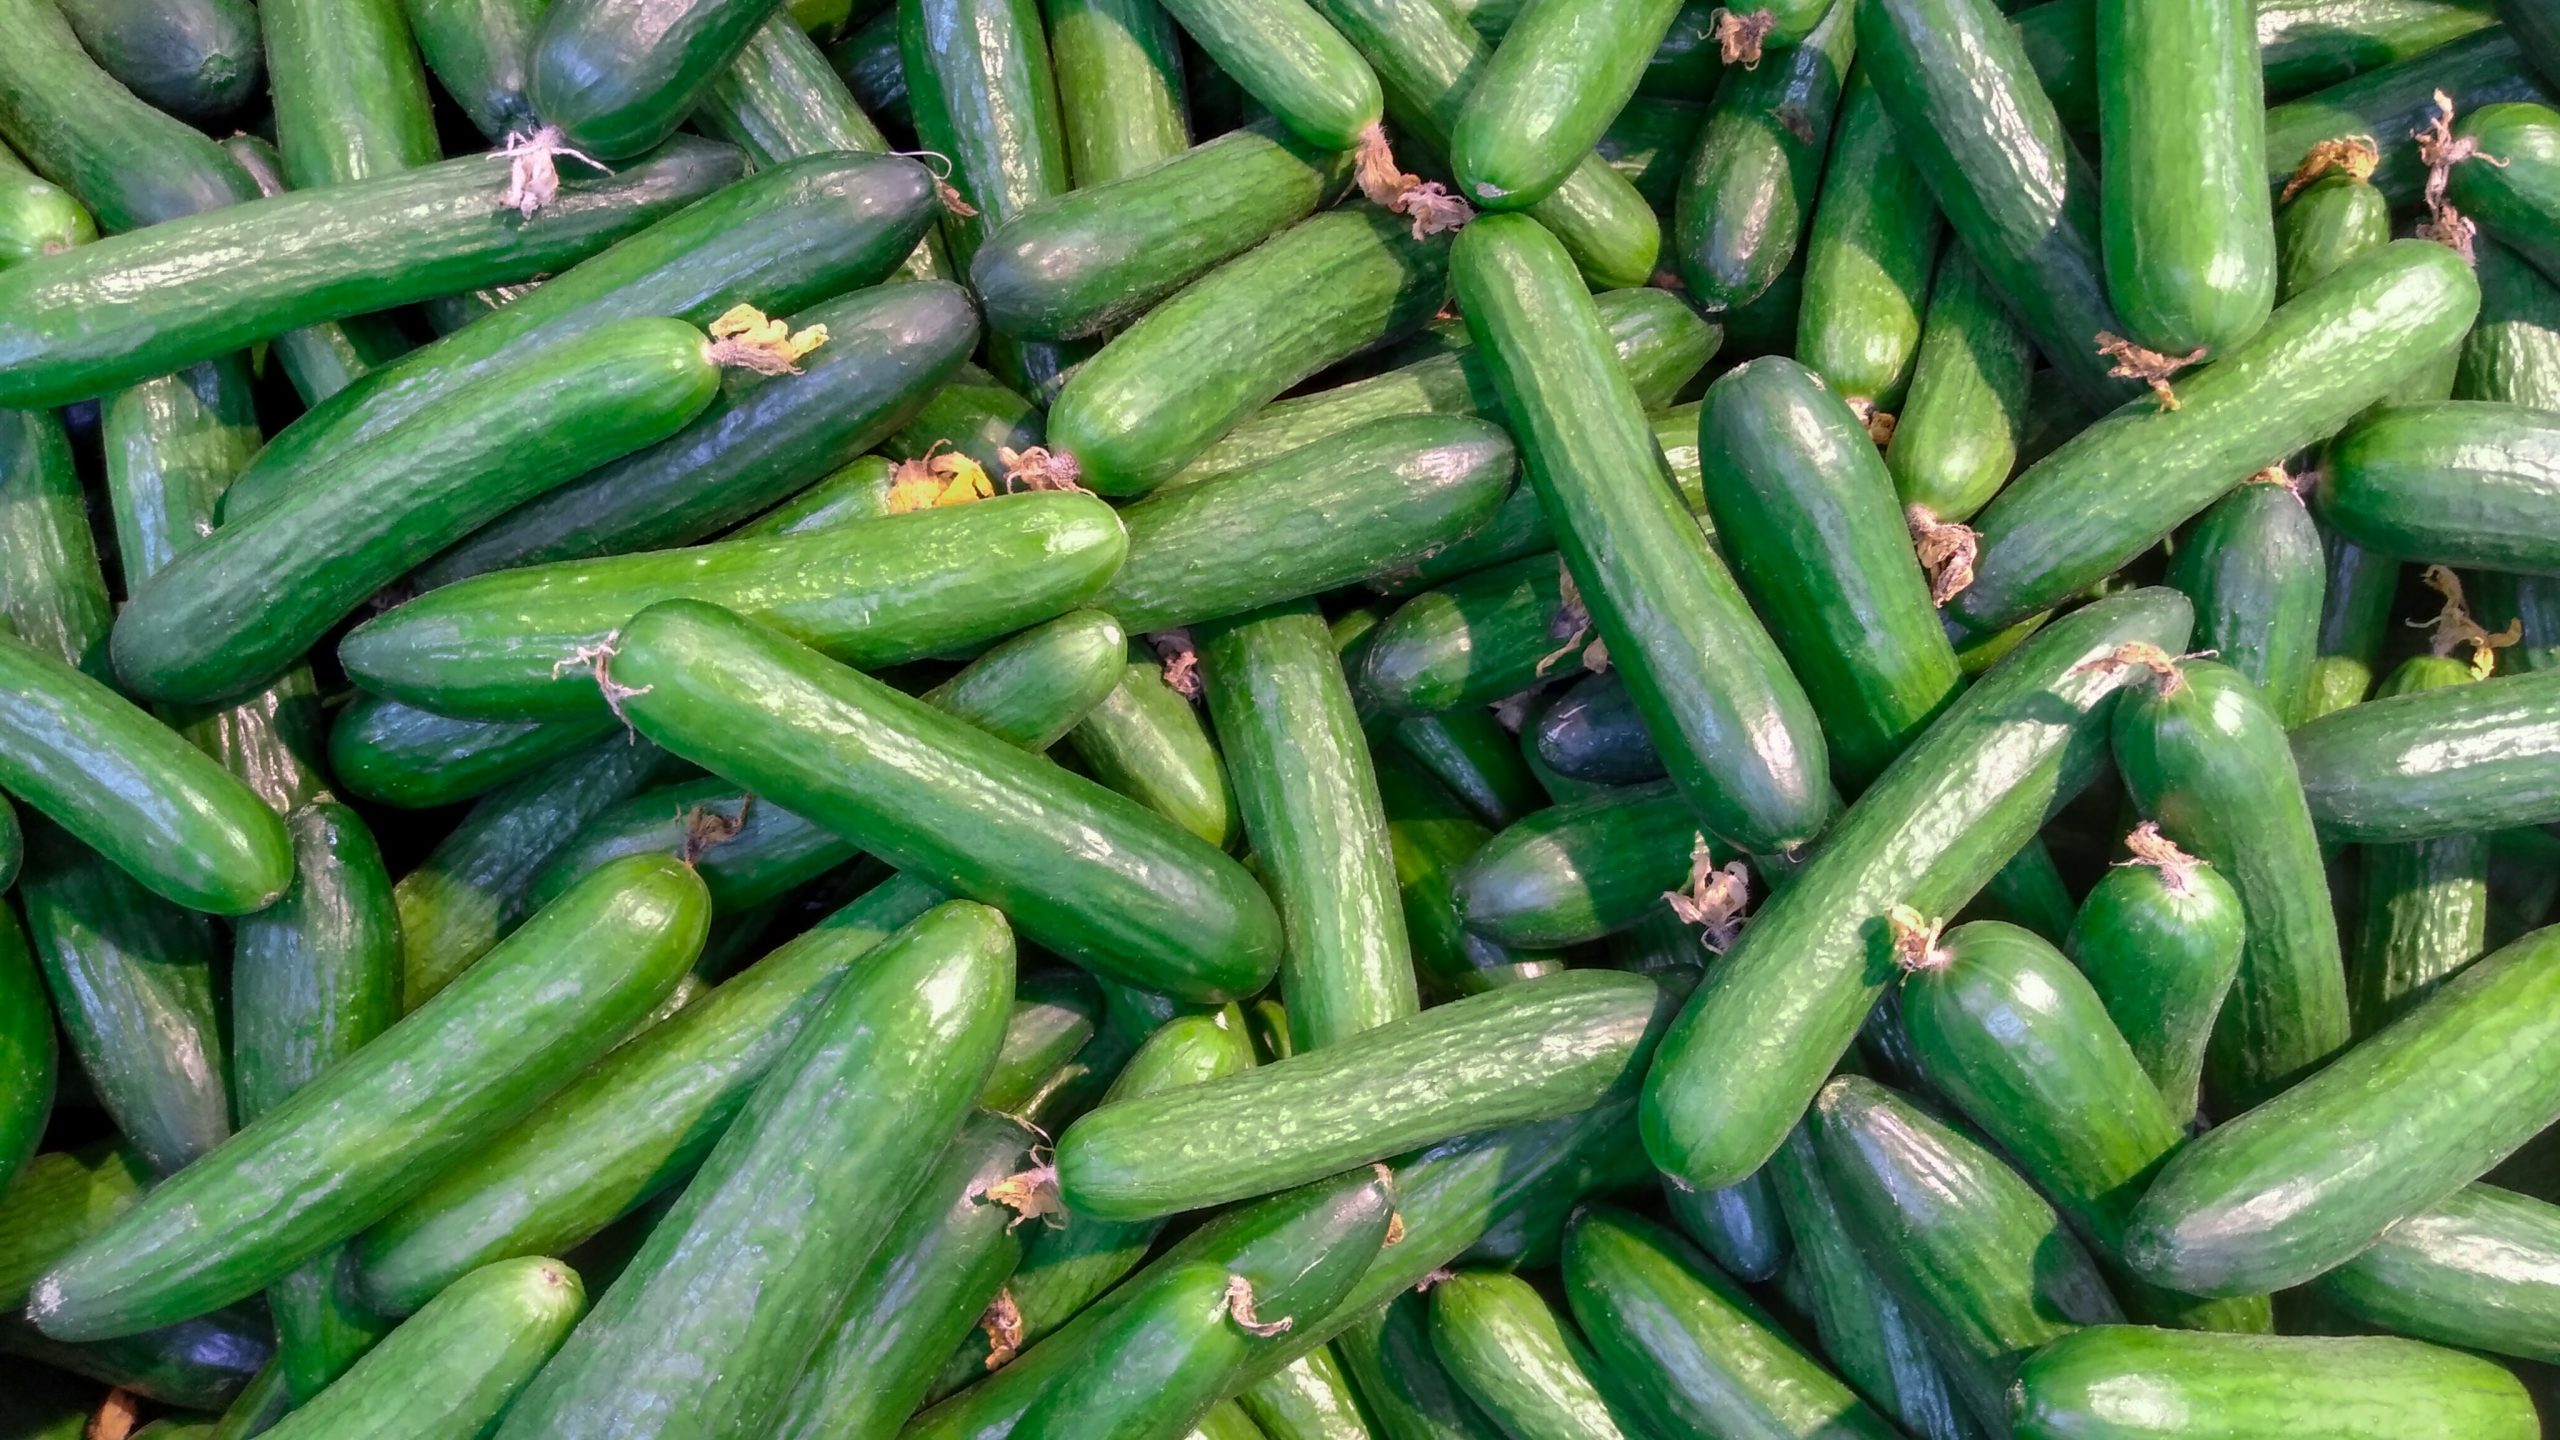 Do Cucumber Seeds Need Light To Germinate?